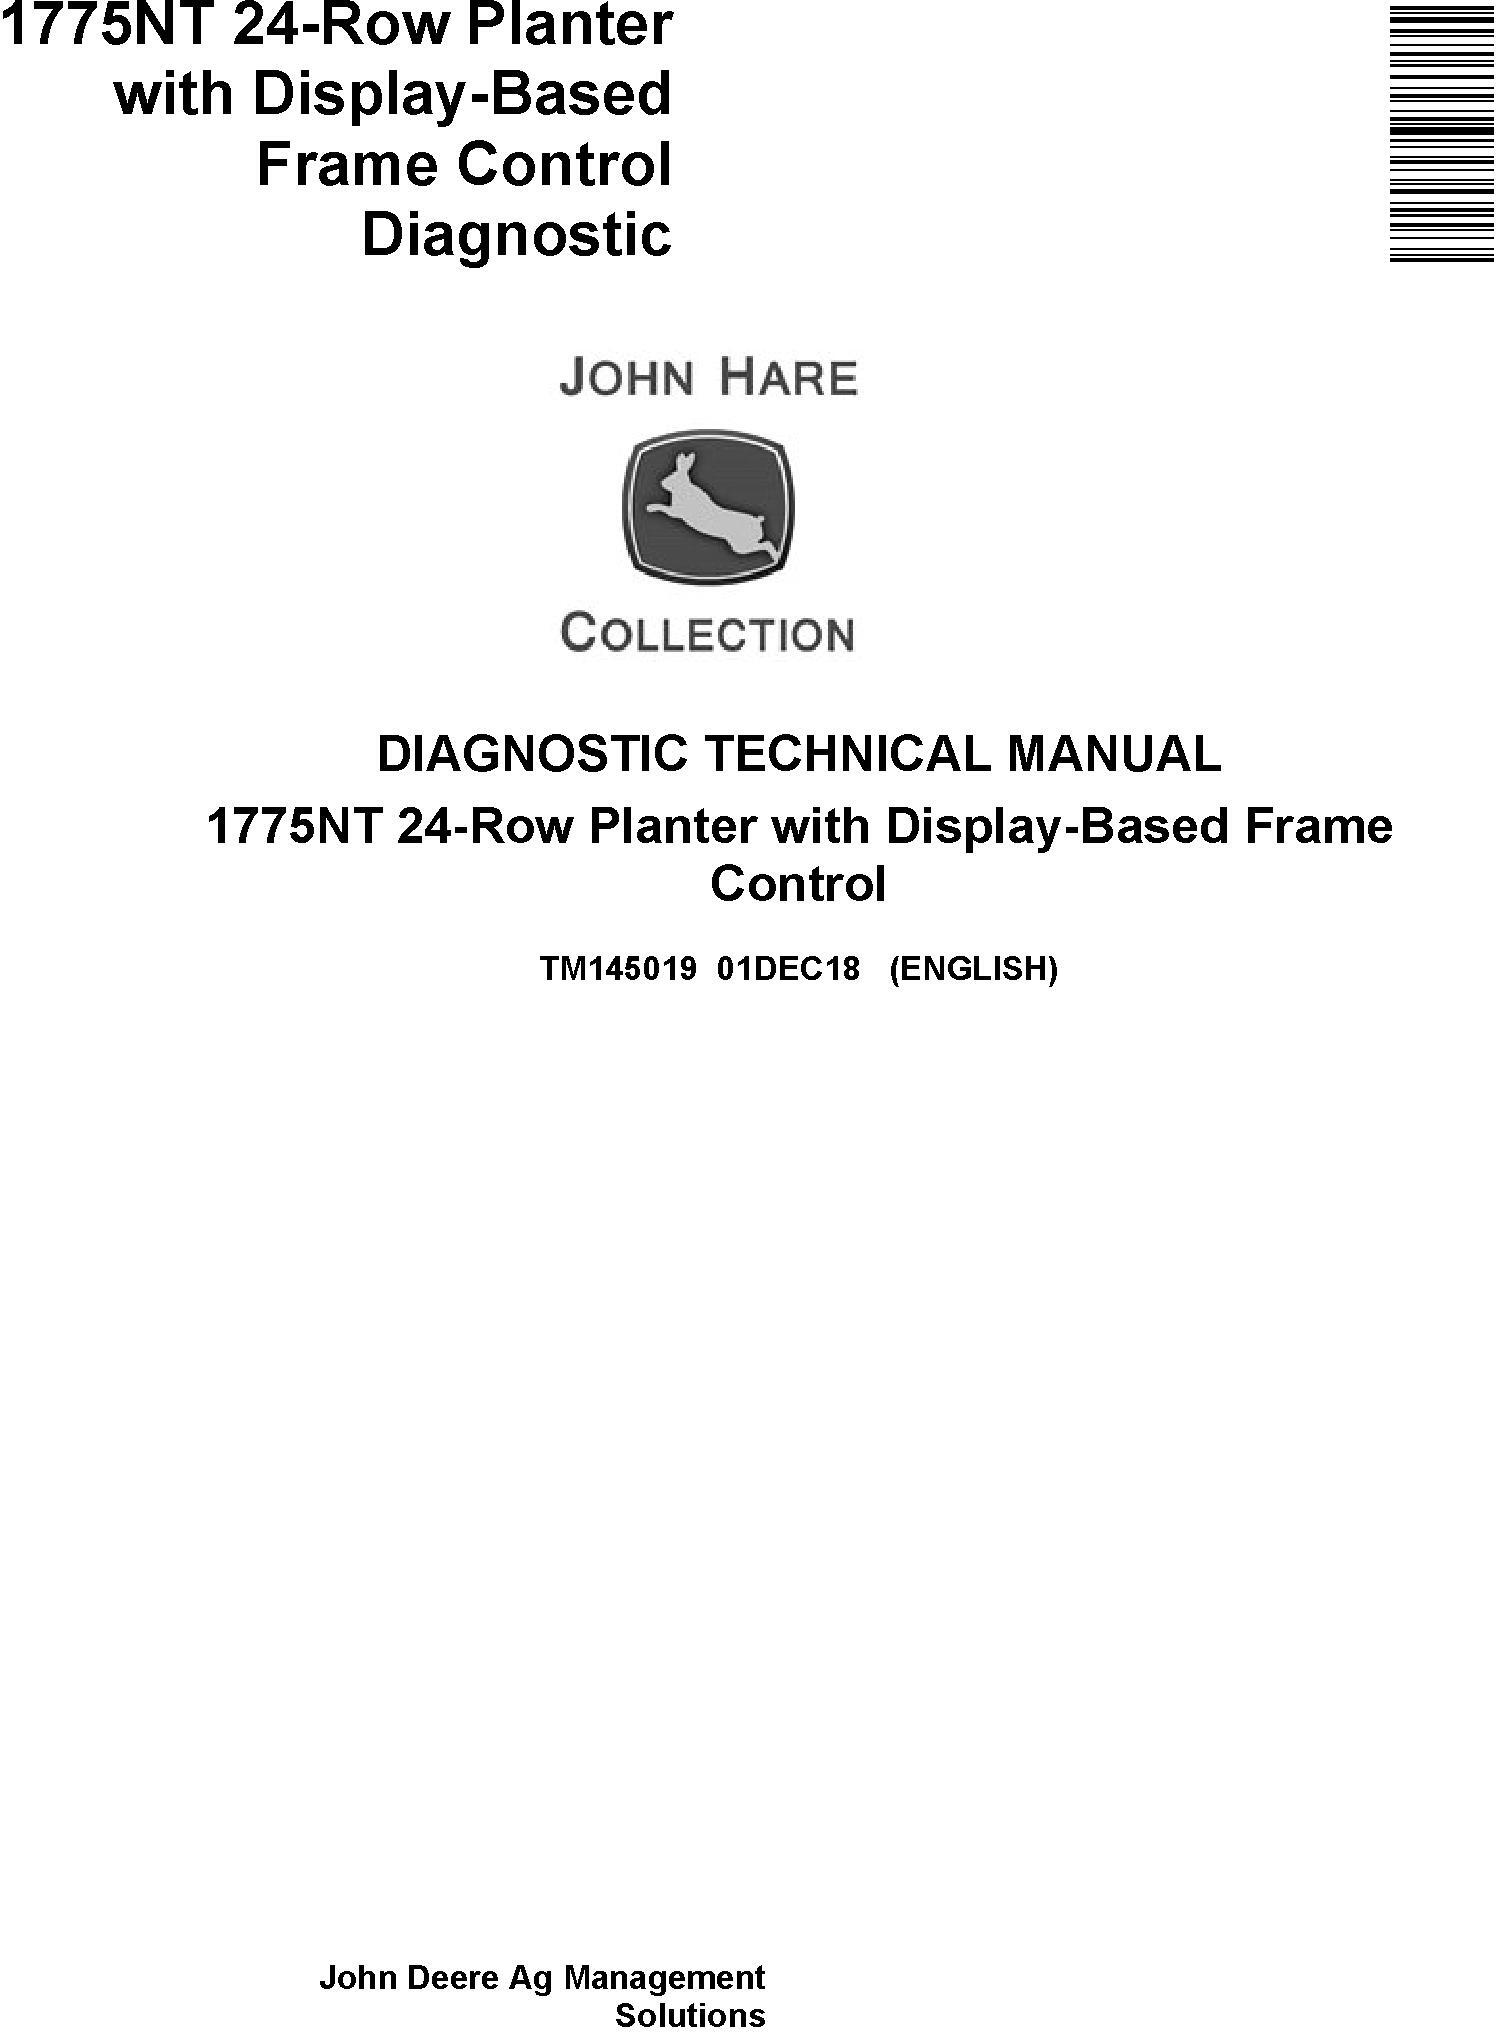 John Deere 1775NT 24-row Planter Diagnostic Technical Manual TM145019